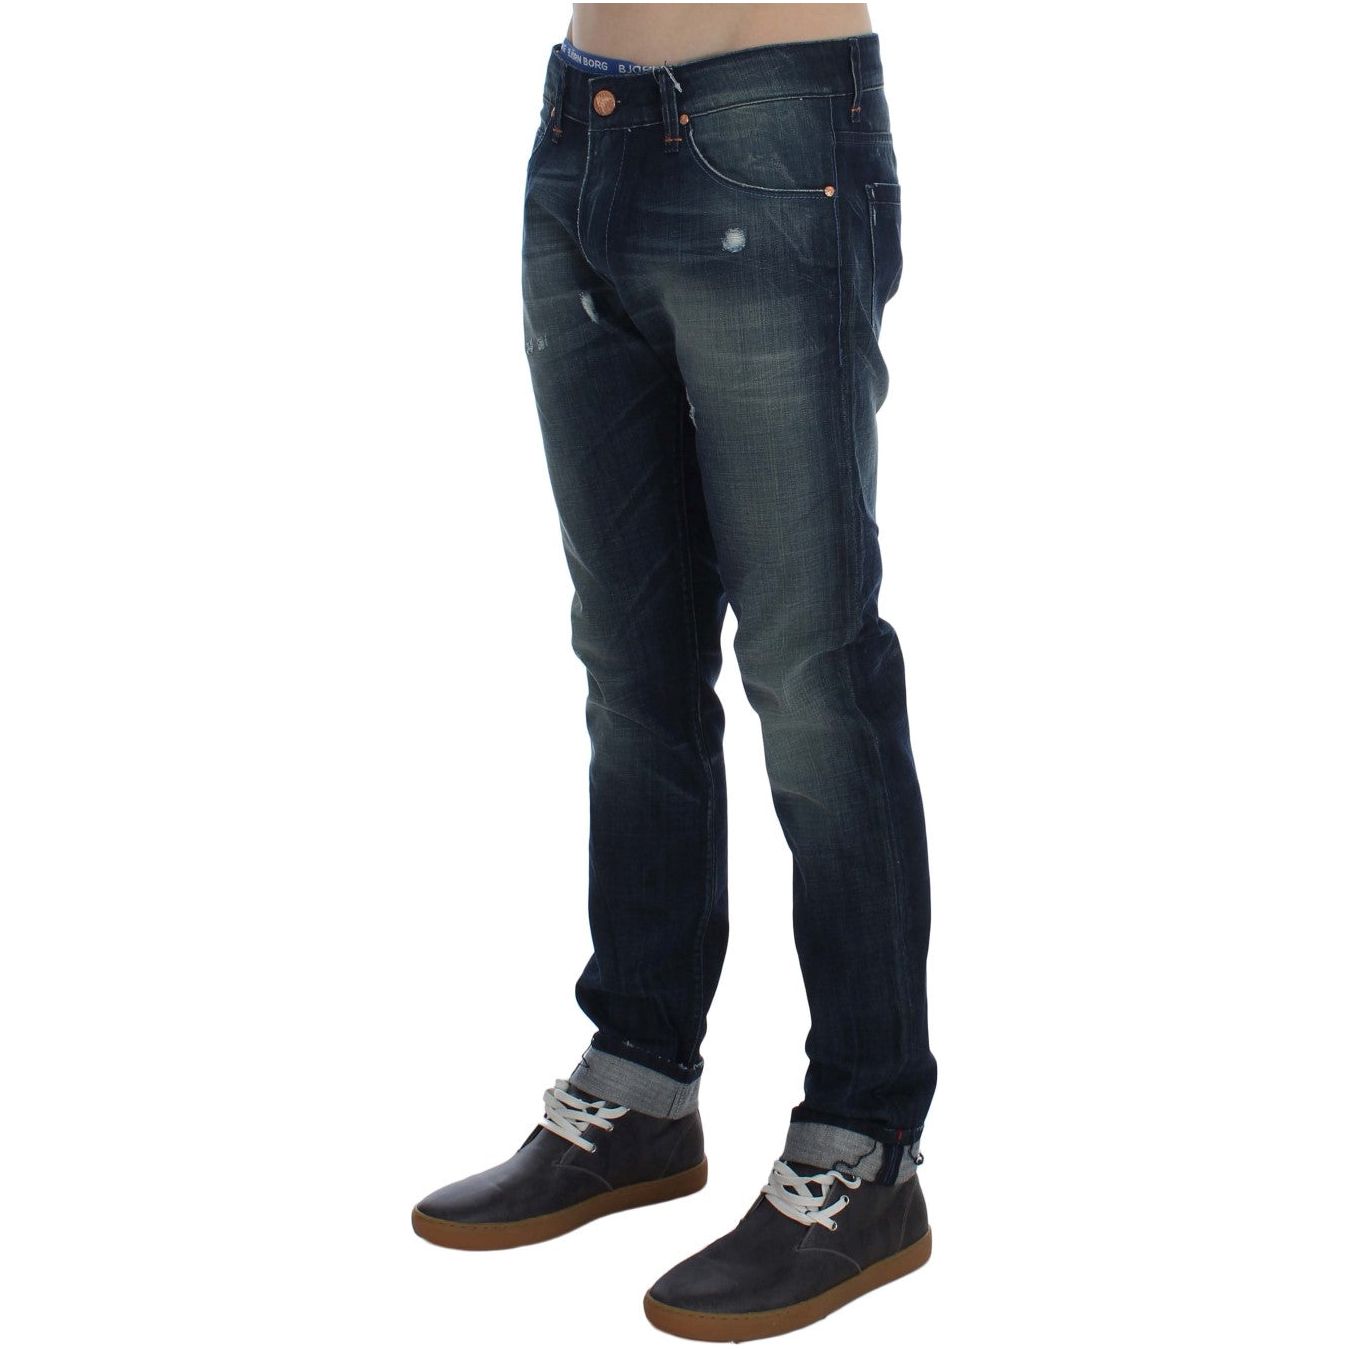 Acht Sleek Slim Fit Italian Denim Jeans blue-wash-cotton-denim-slim-fit-jeans